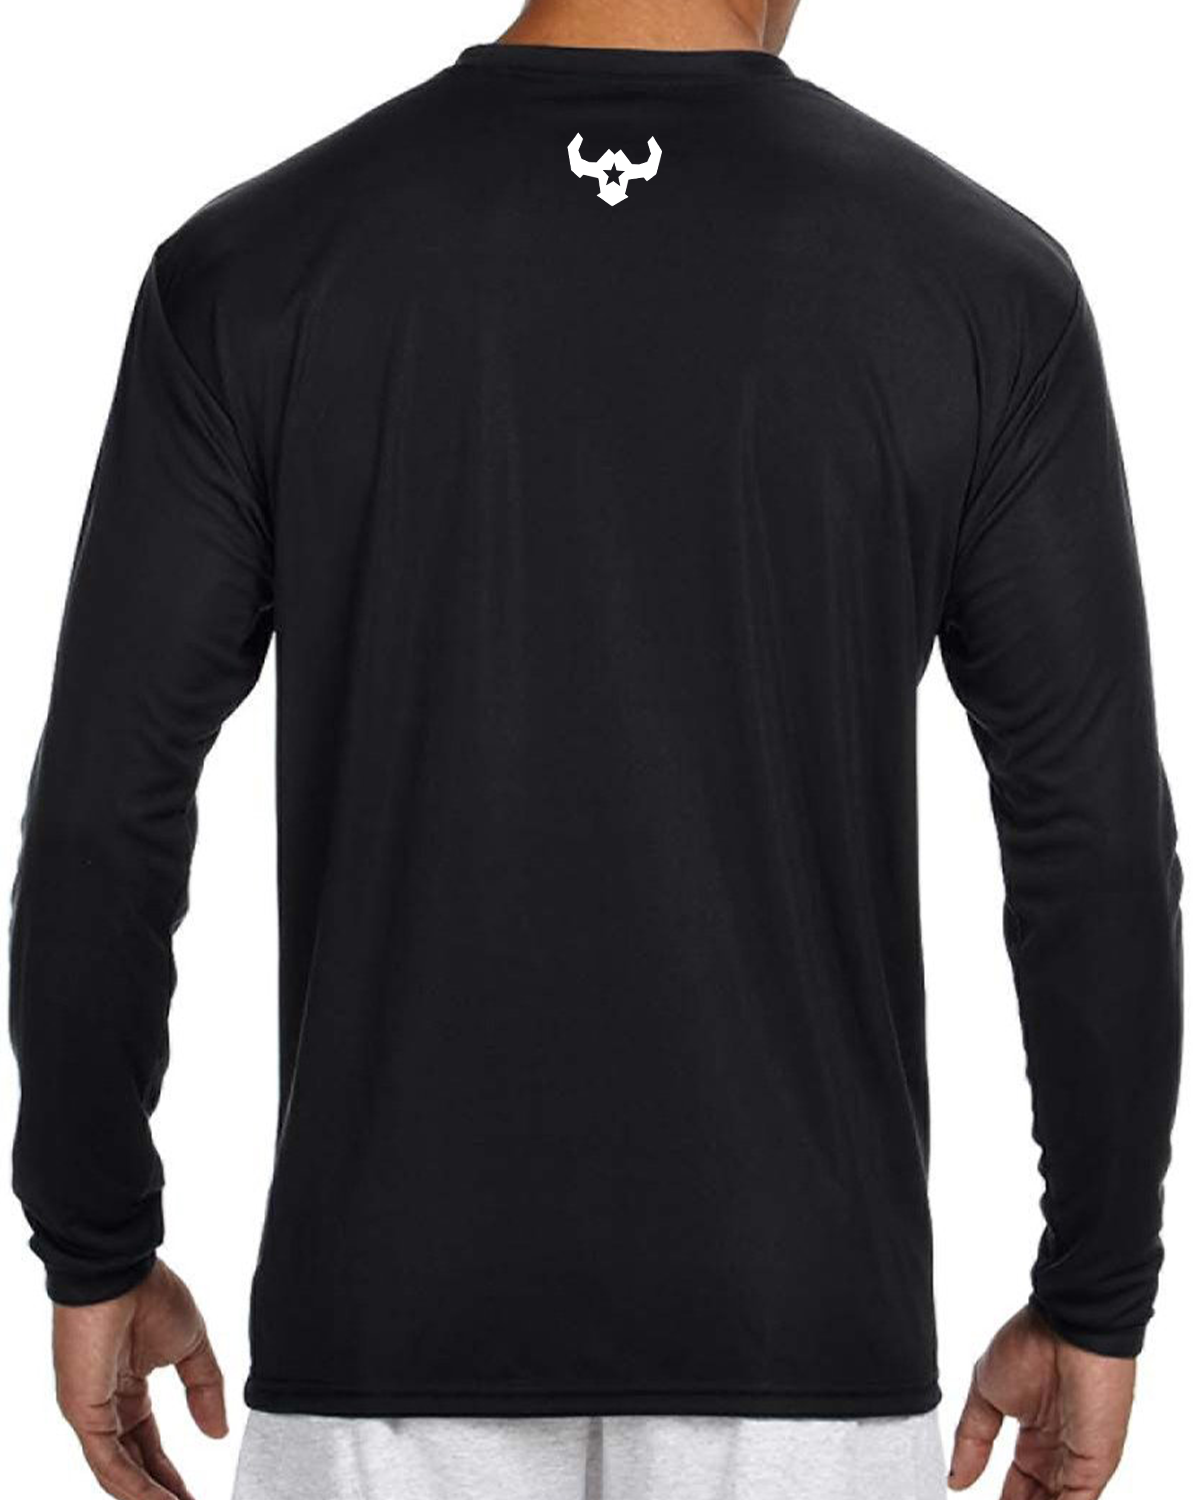 Cheap Outdoors Affordable Long Sleeve Long Sleeve High Performance Black VQRO Shirt